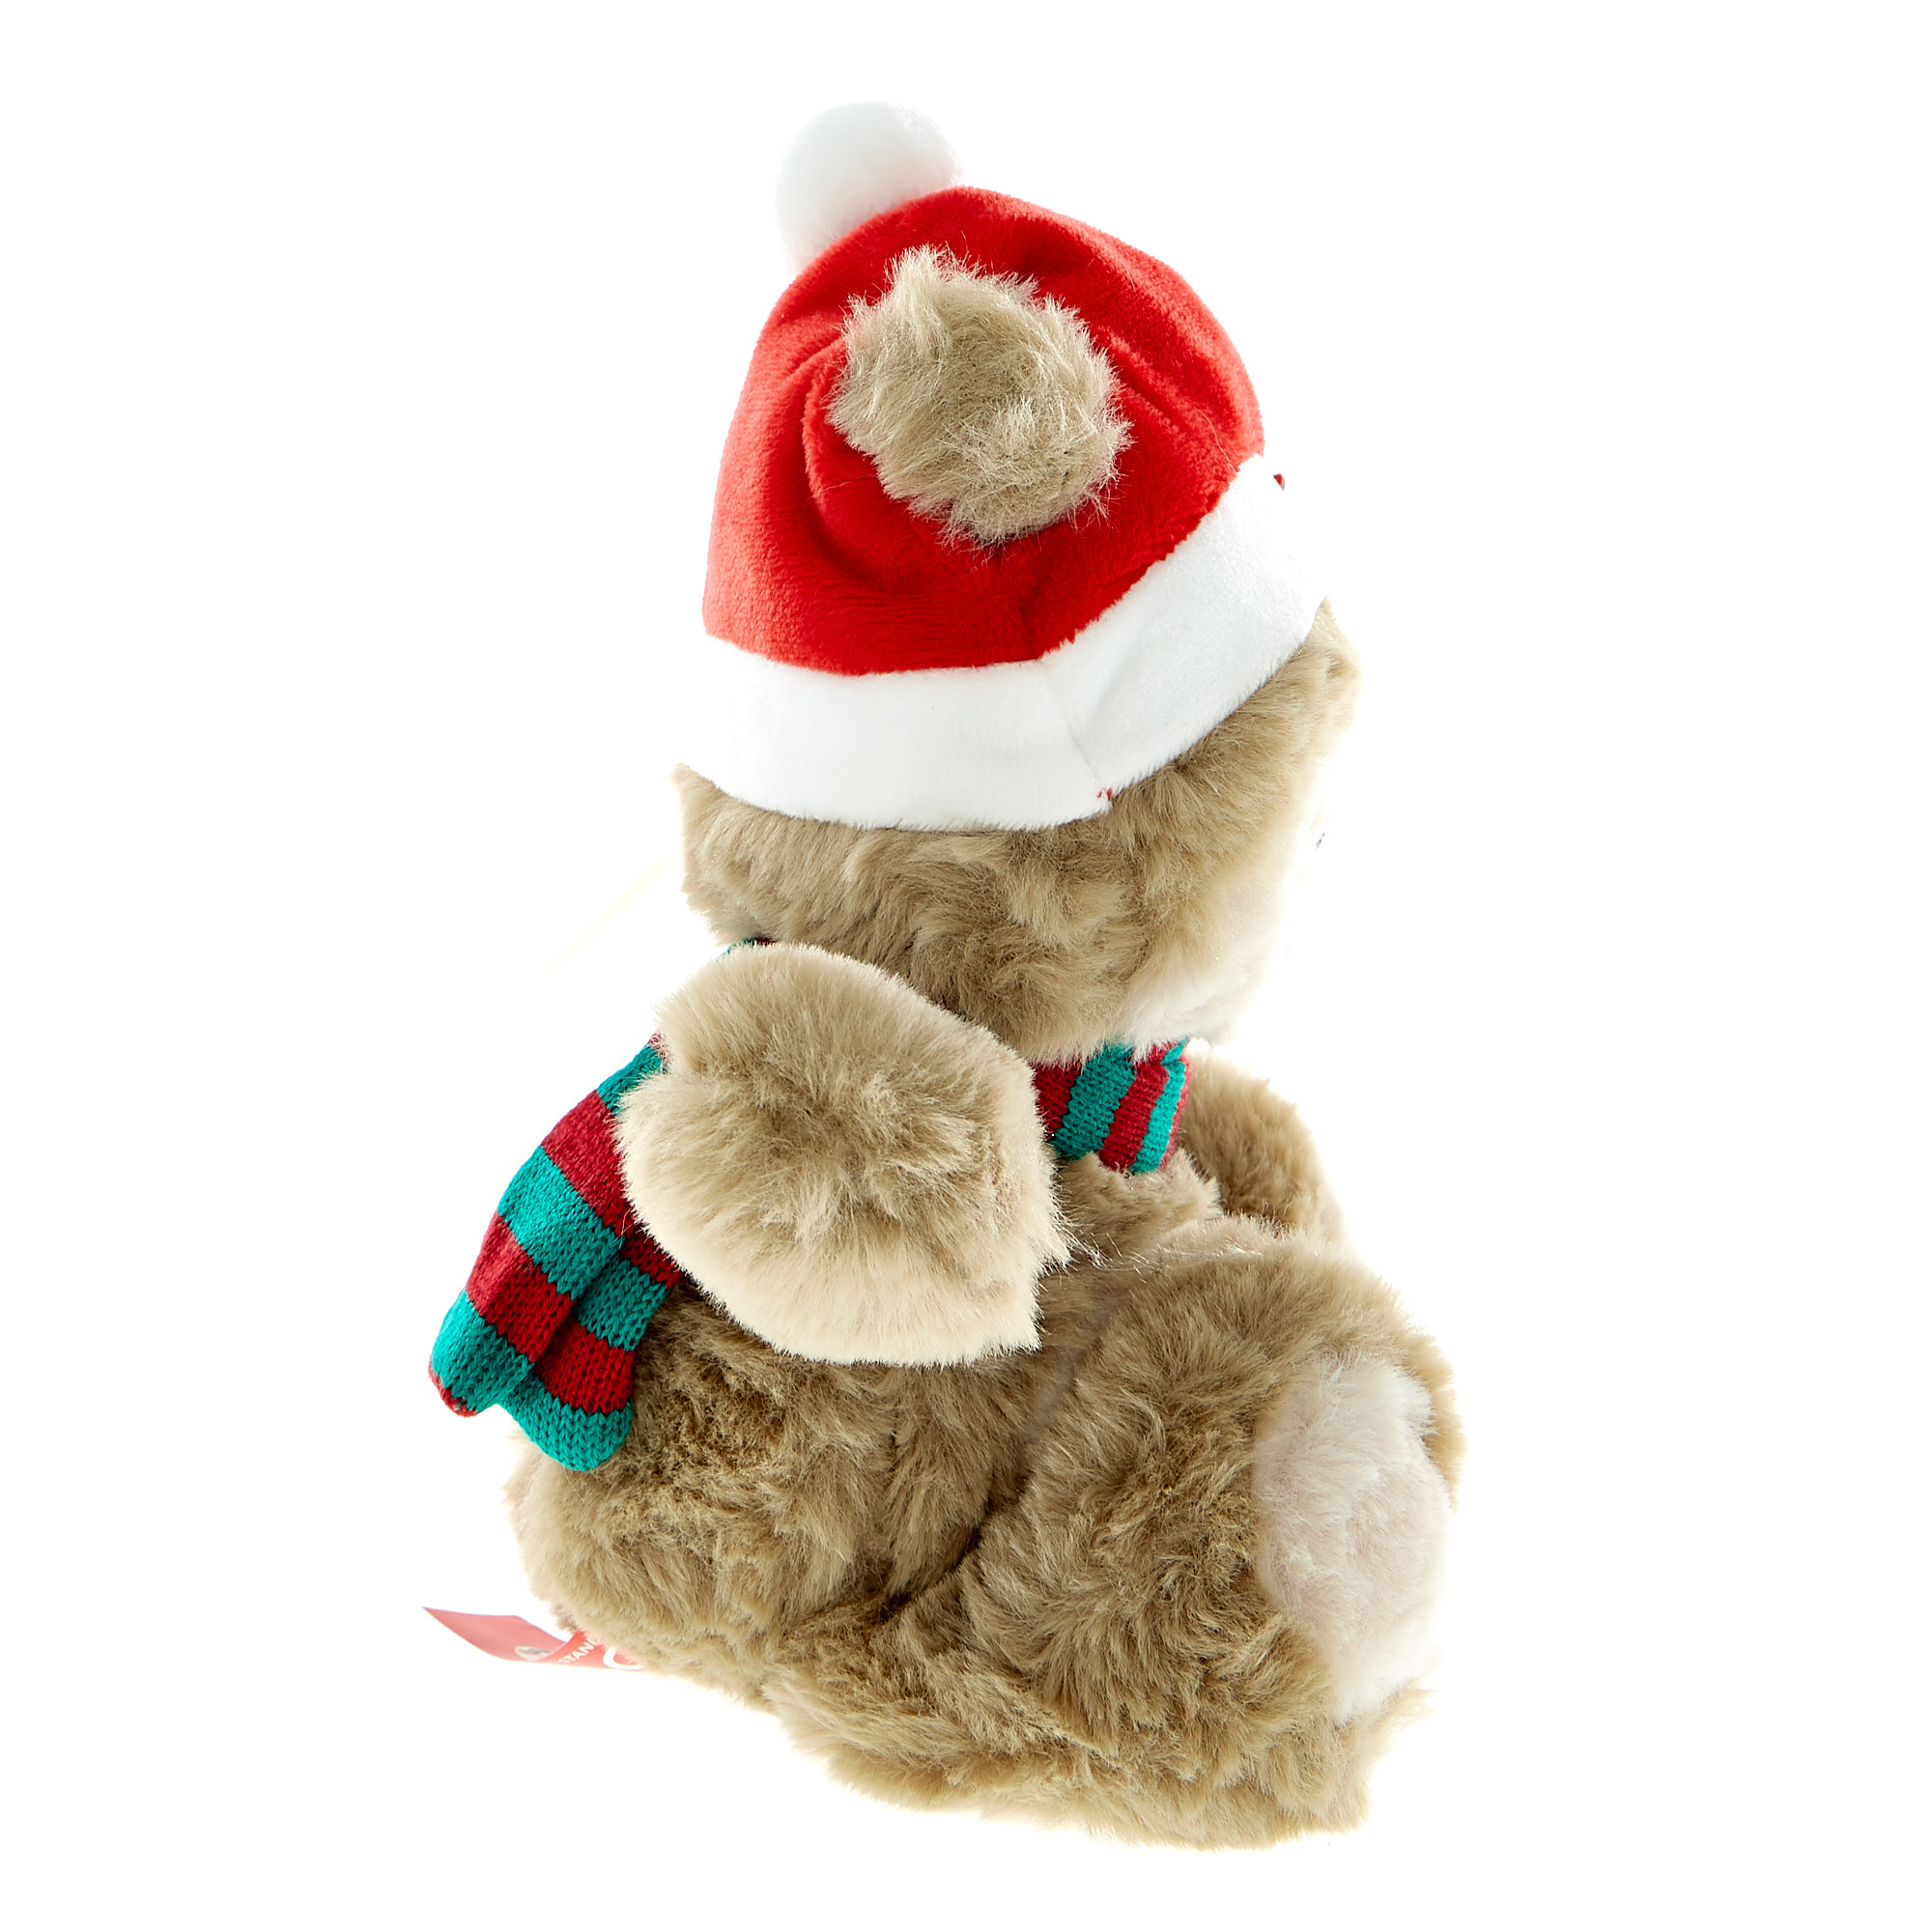 Winter Hugs Bear Christmas Soft Toy 